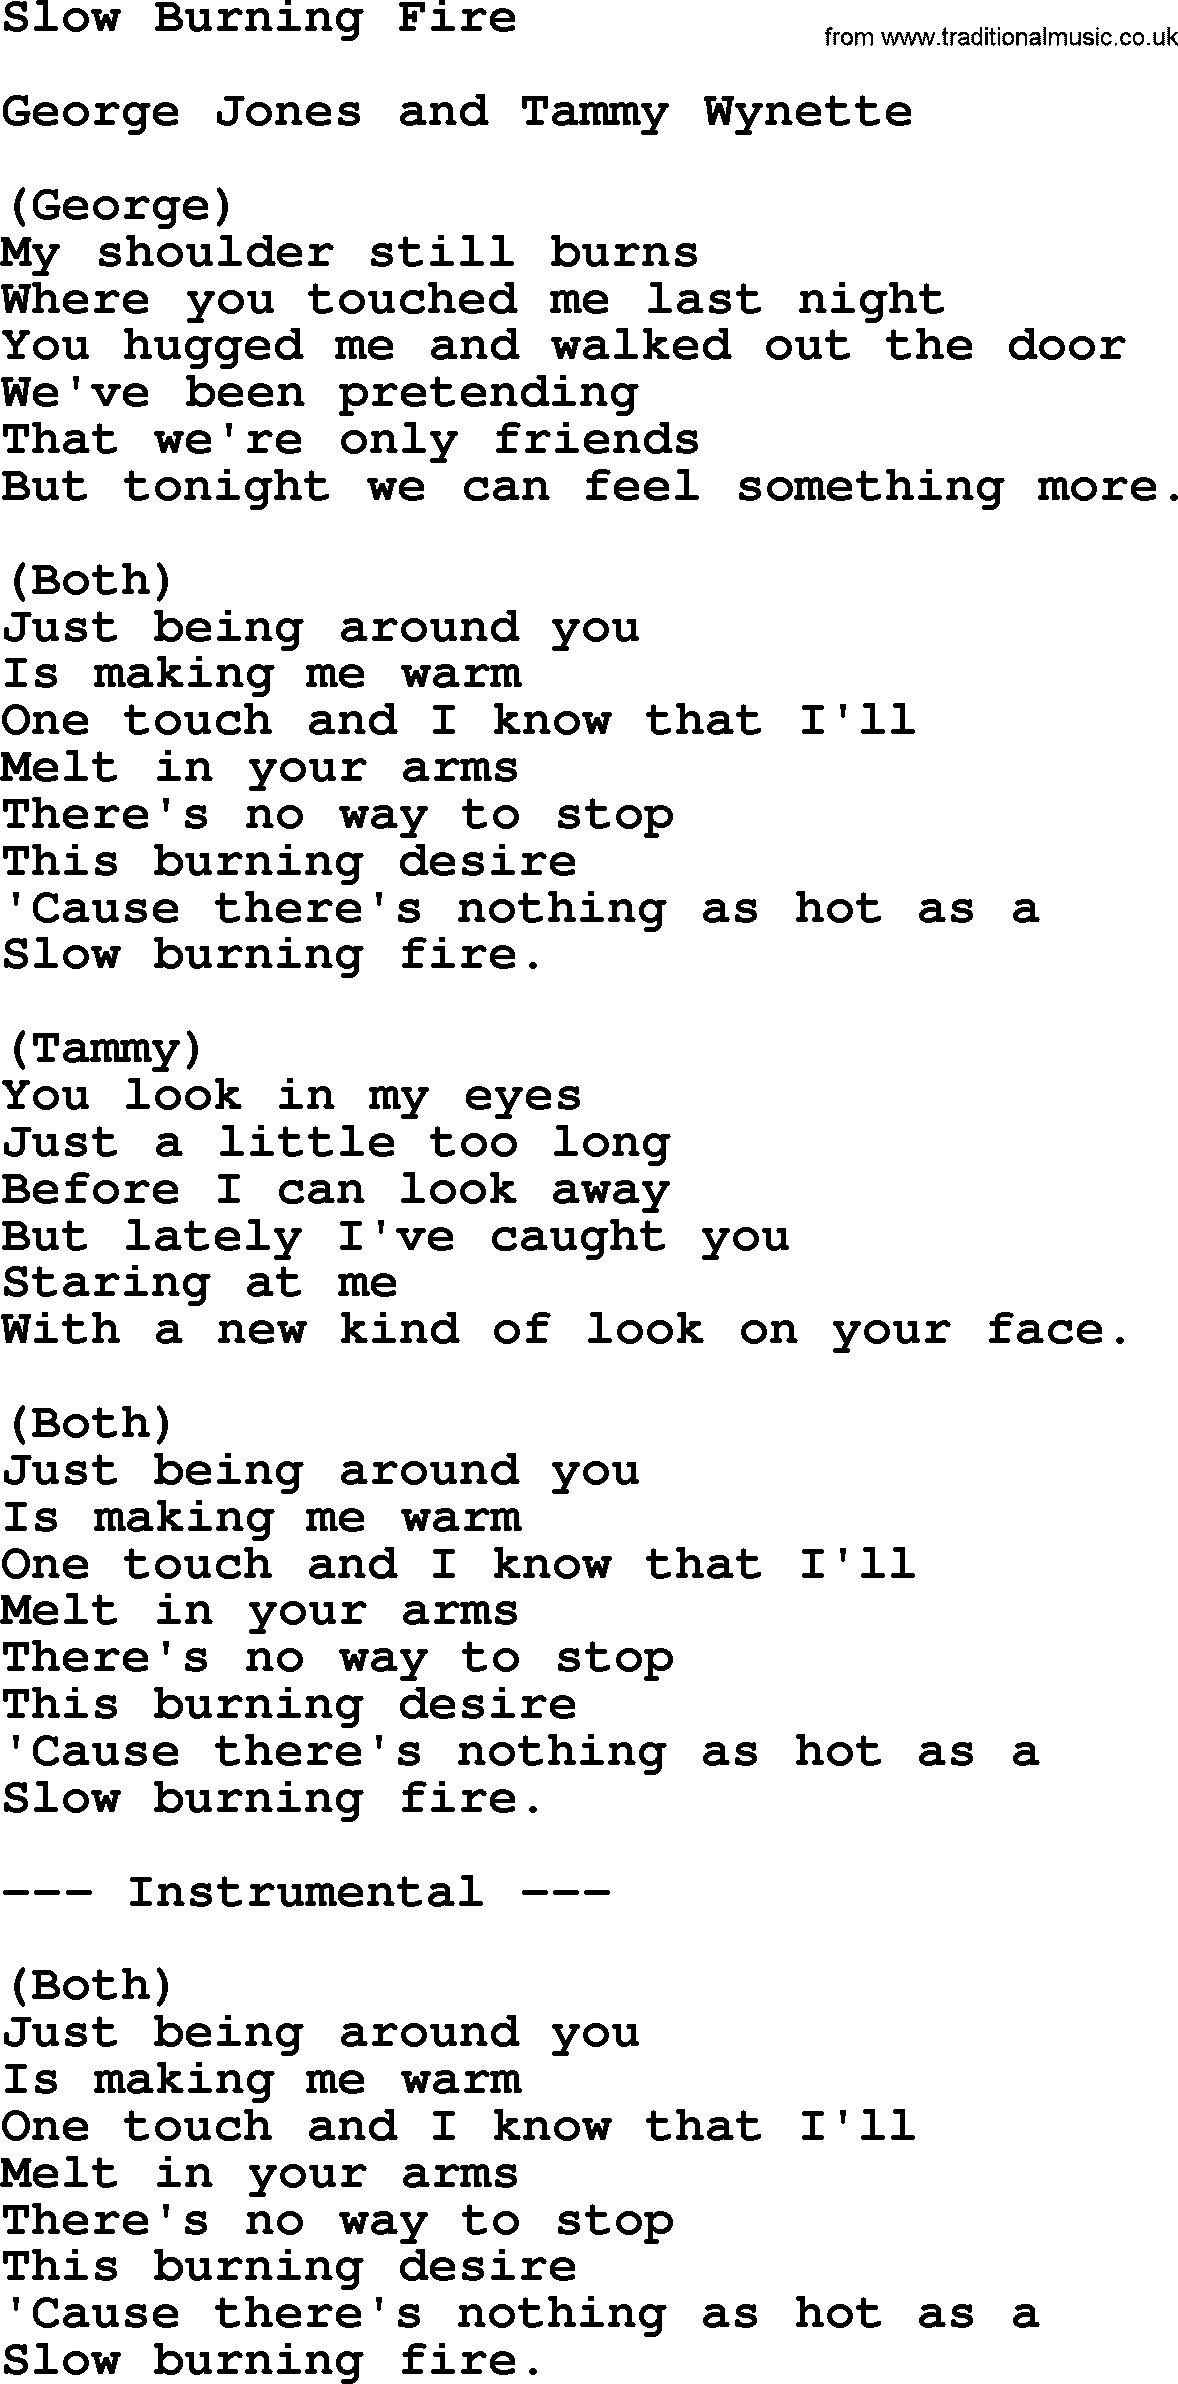 George Jones song: Slow Burning Fire, lyrics